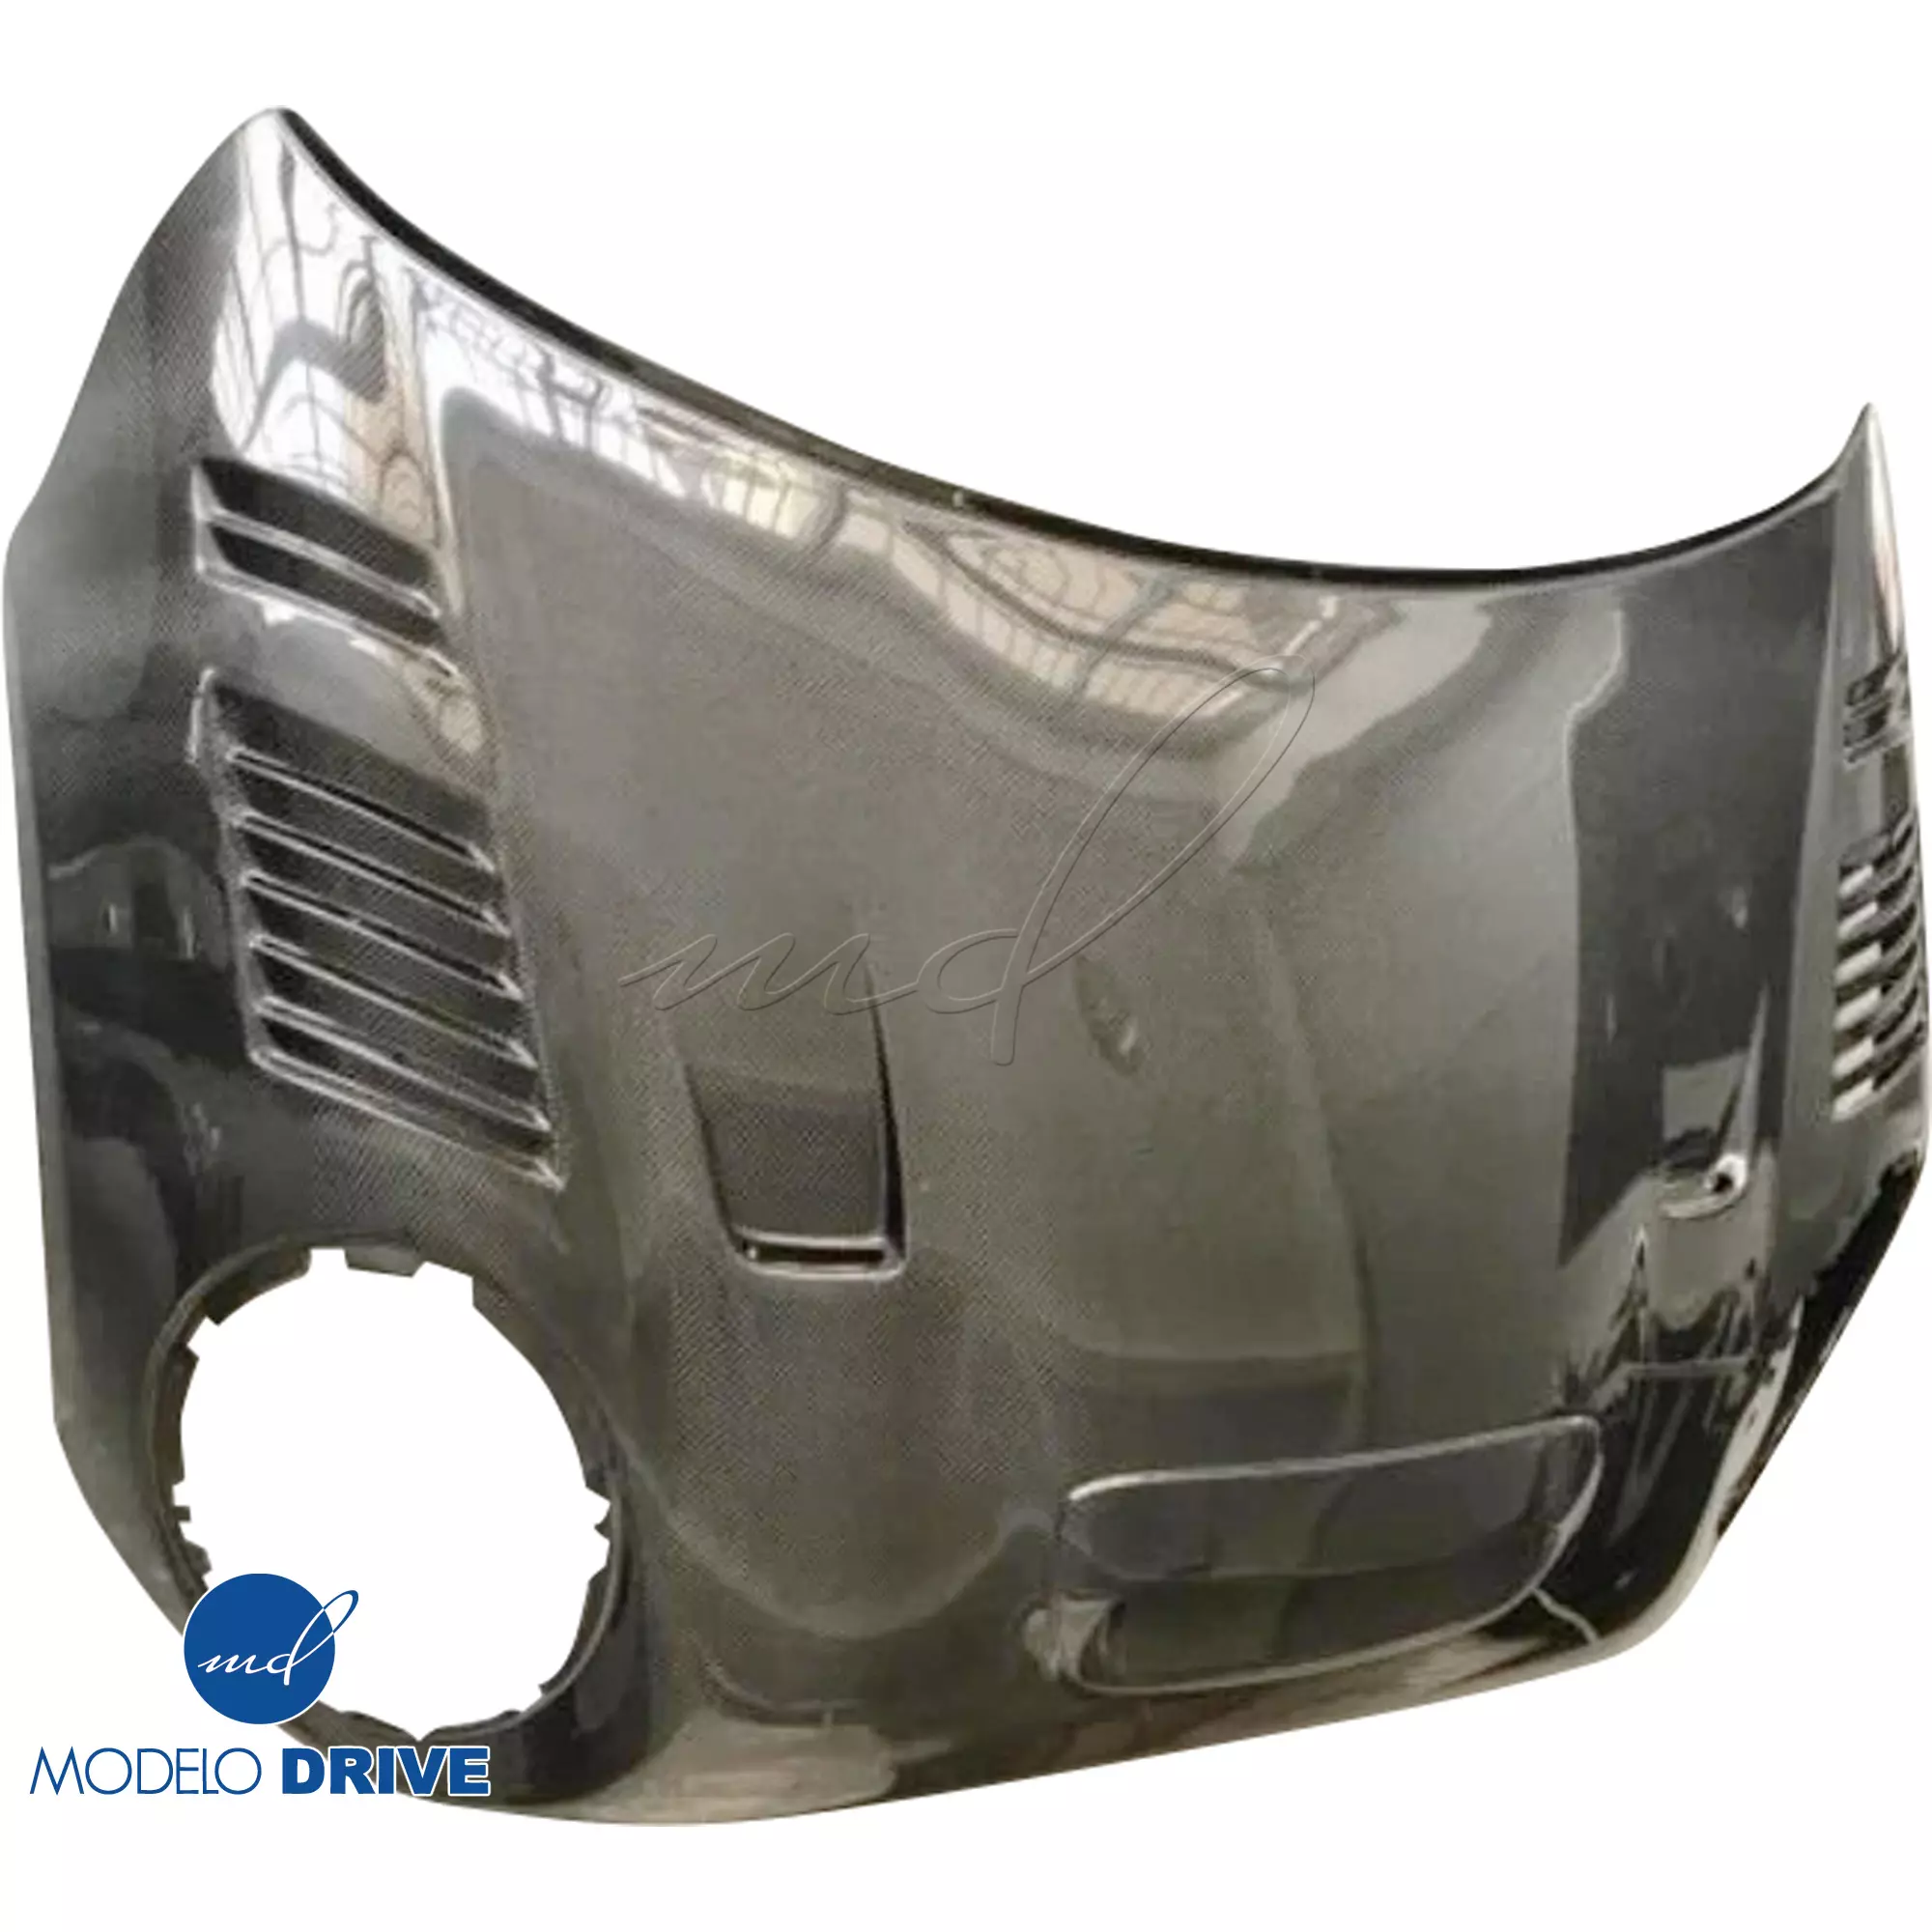 ModeloDrive Carbon Fiber DUAG Hood > Mini Mini Cooper F56 F57 2014-2020 - Image 7